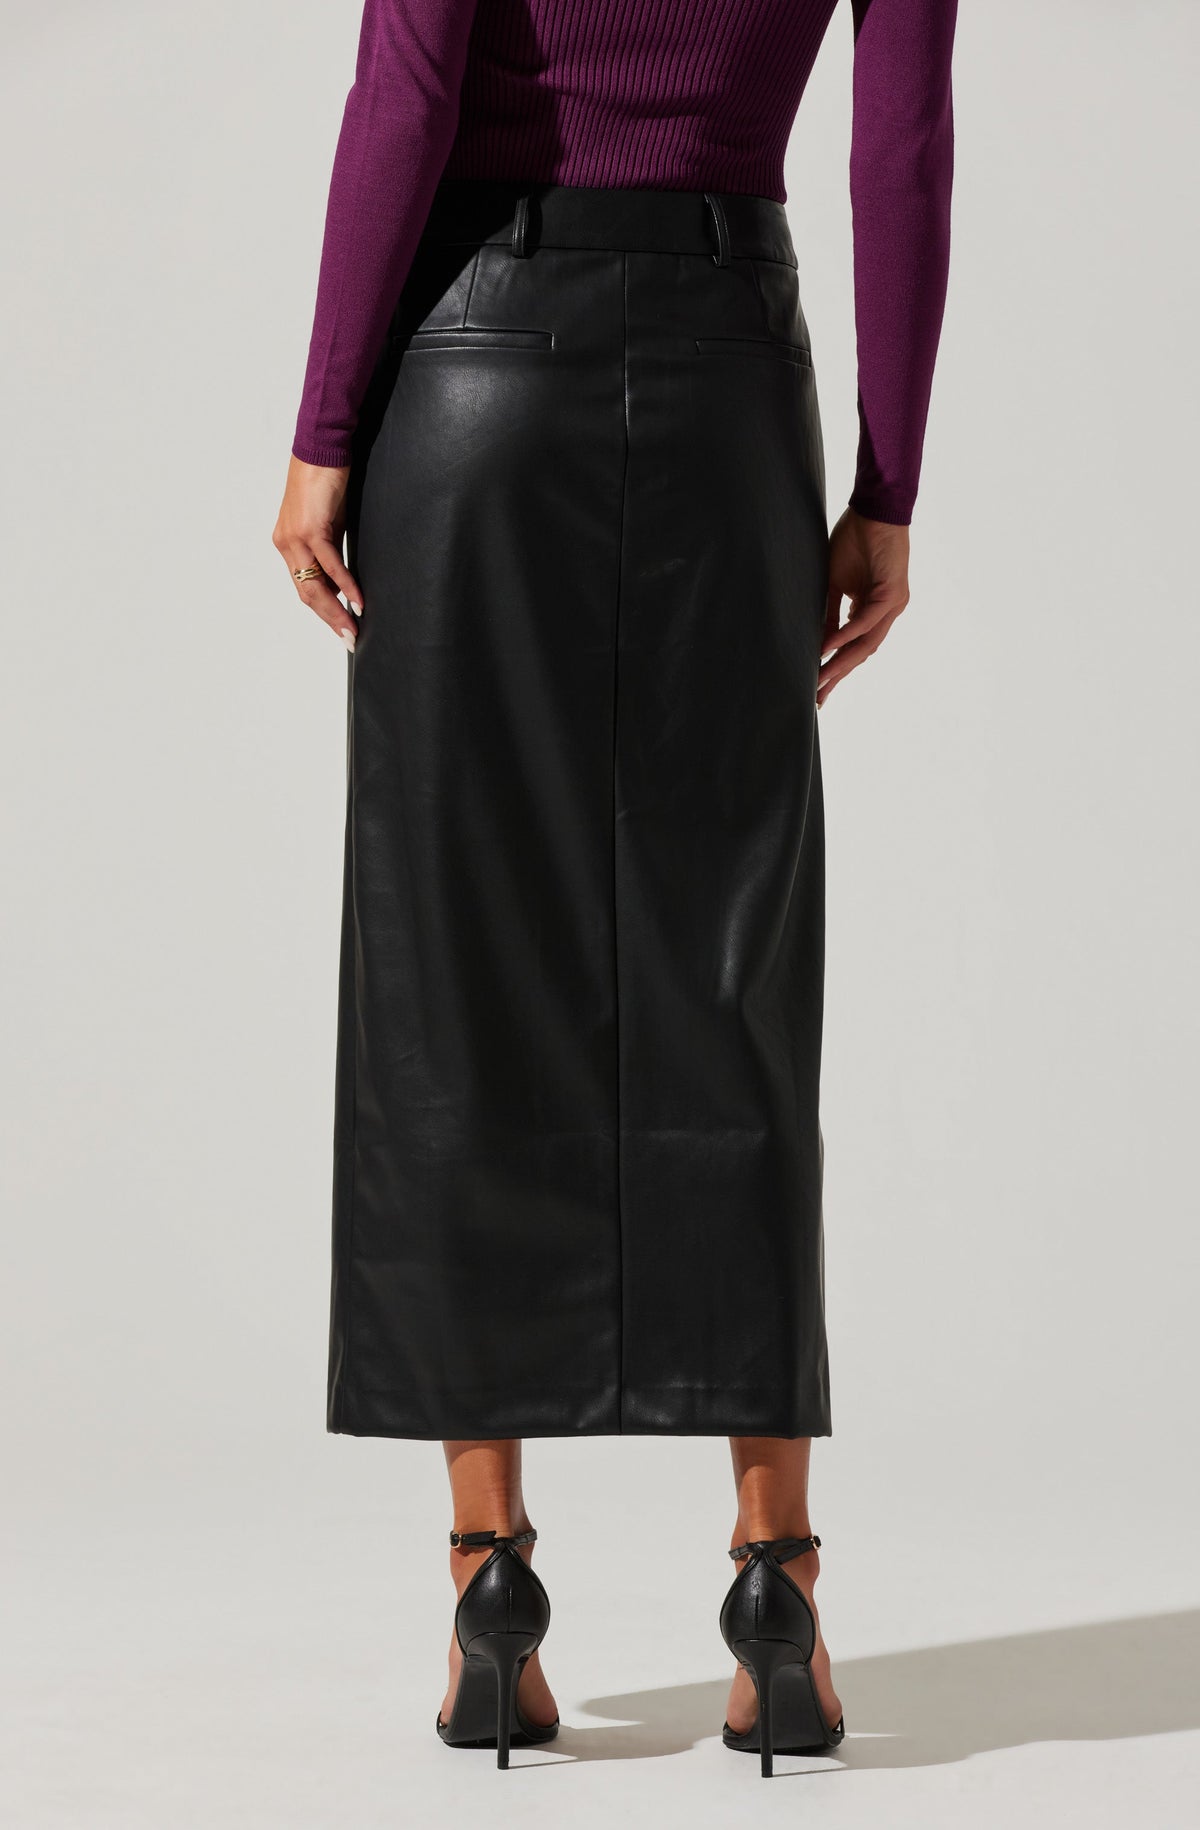 Low Rise Faux Leather Midi Skirt - Black / XS